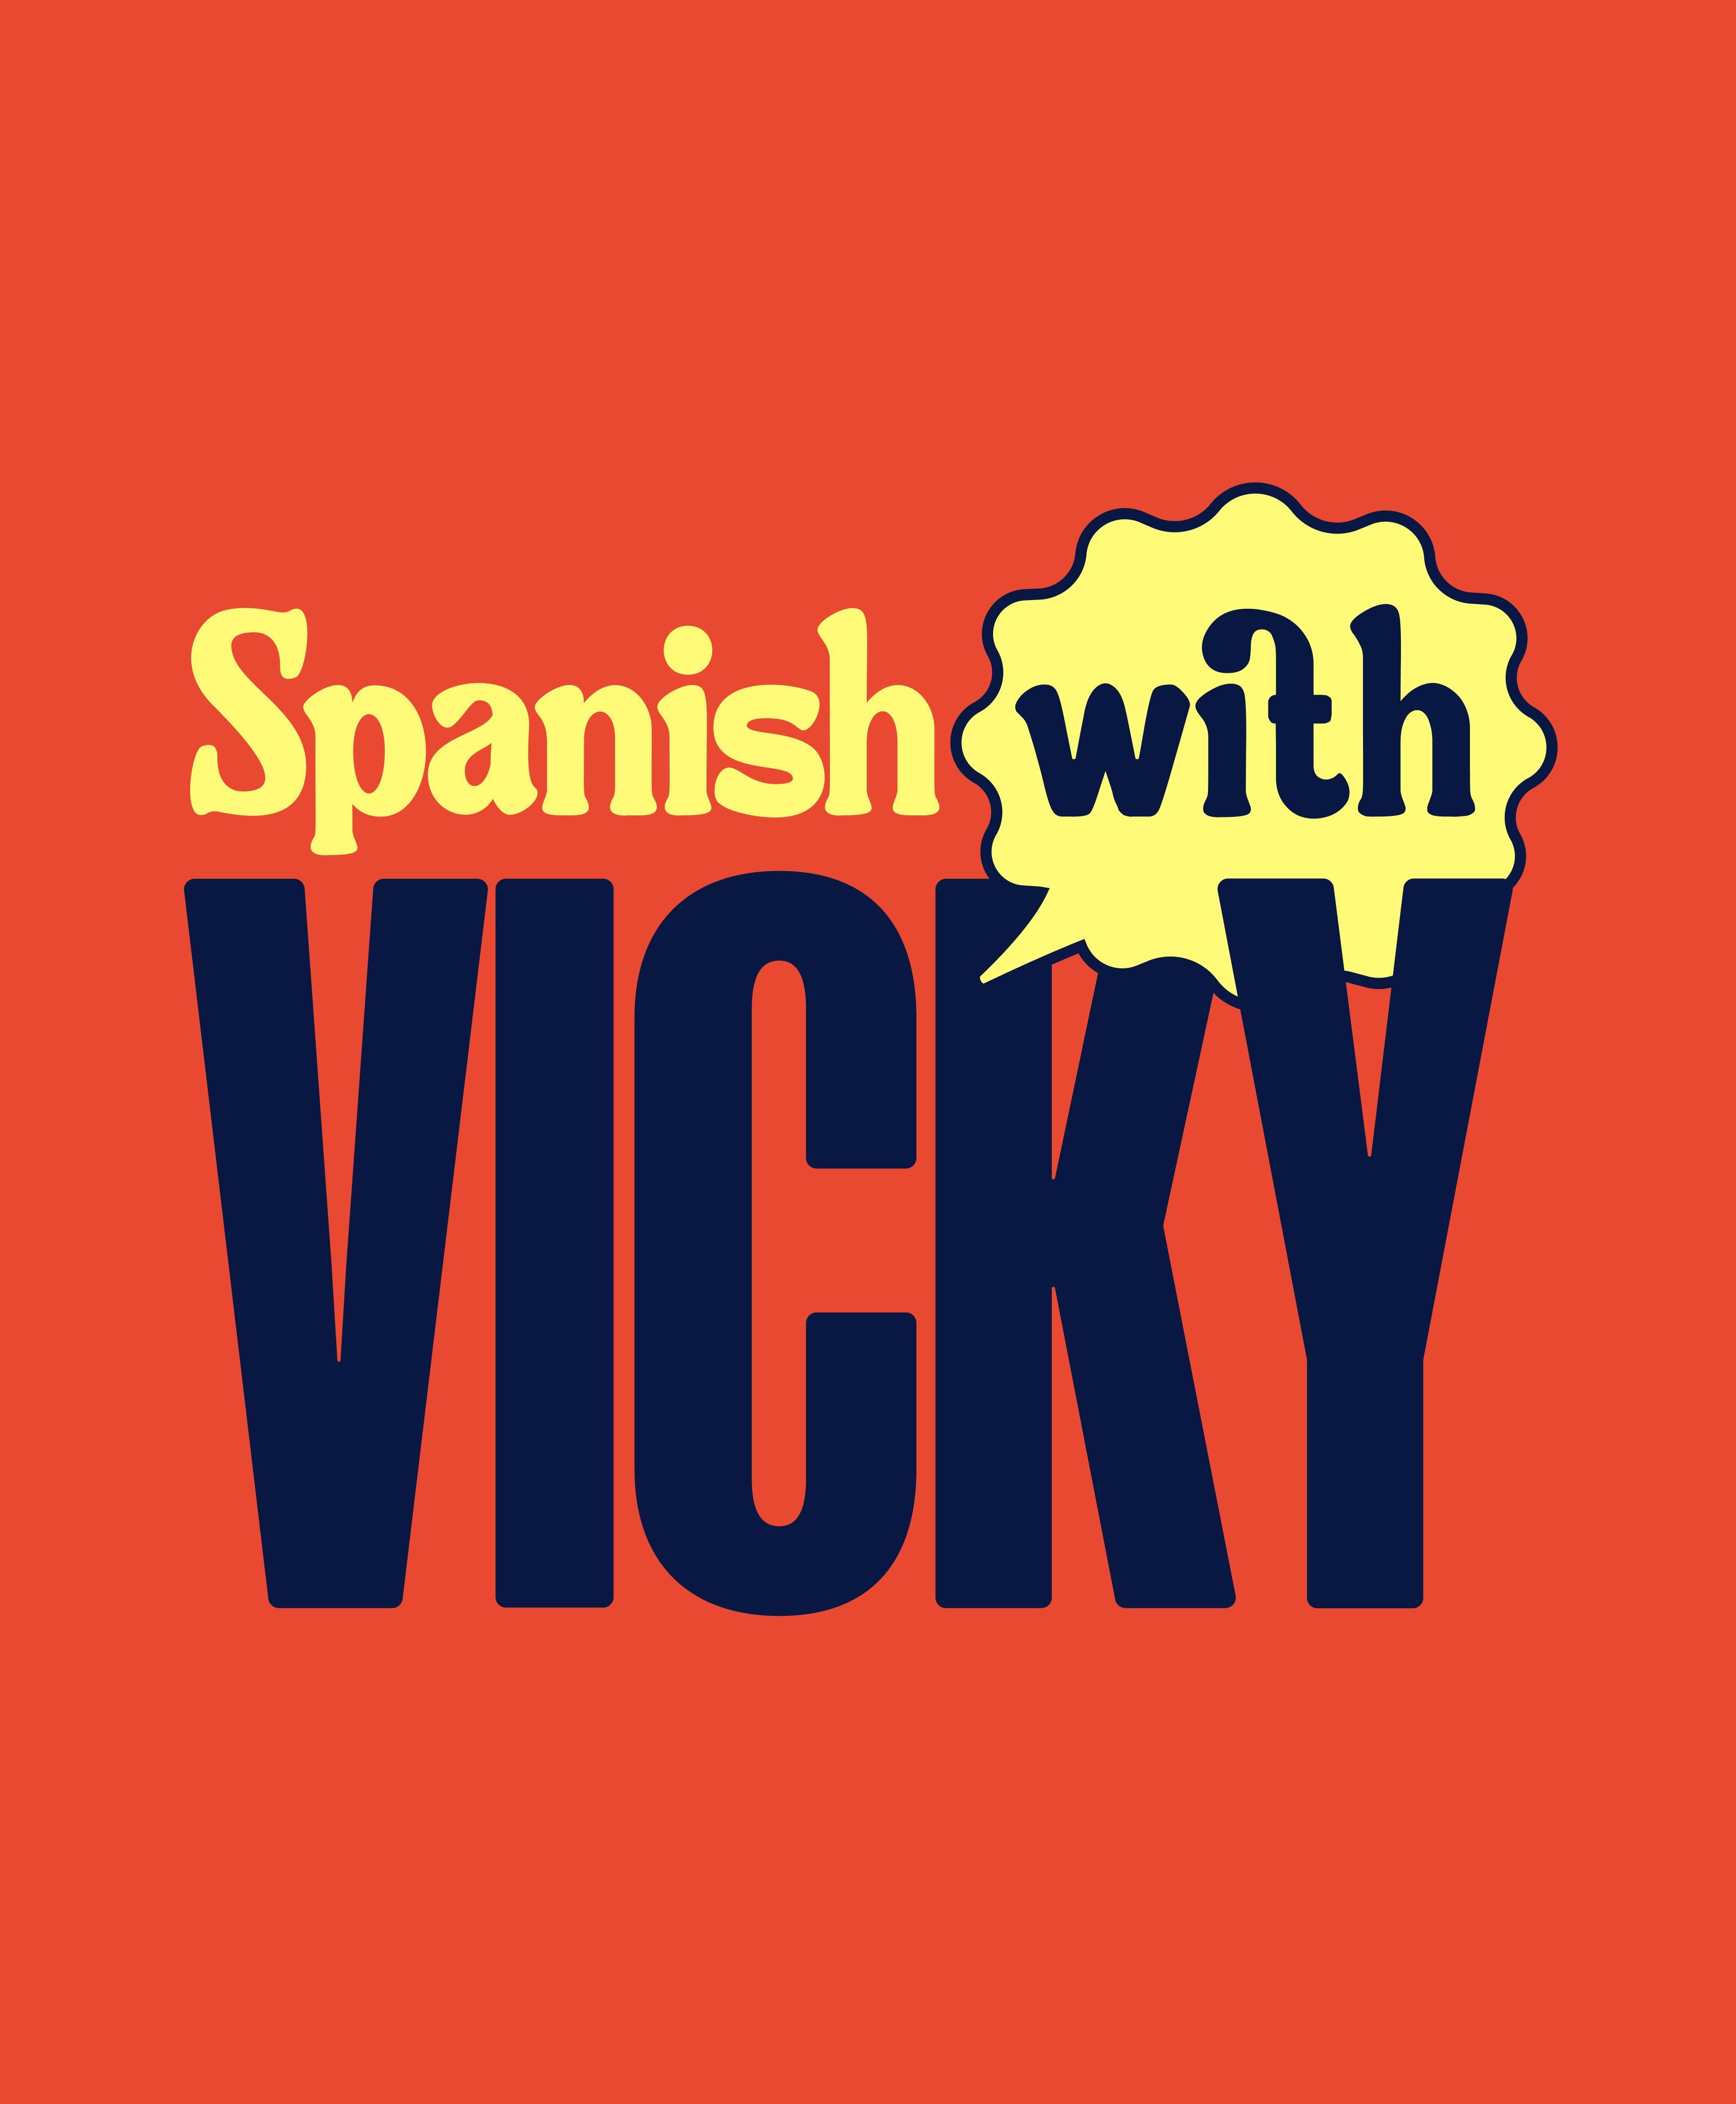 Spanish with Vicky logo